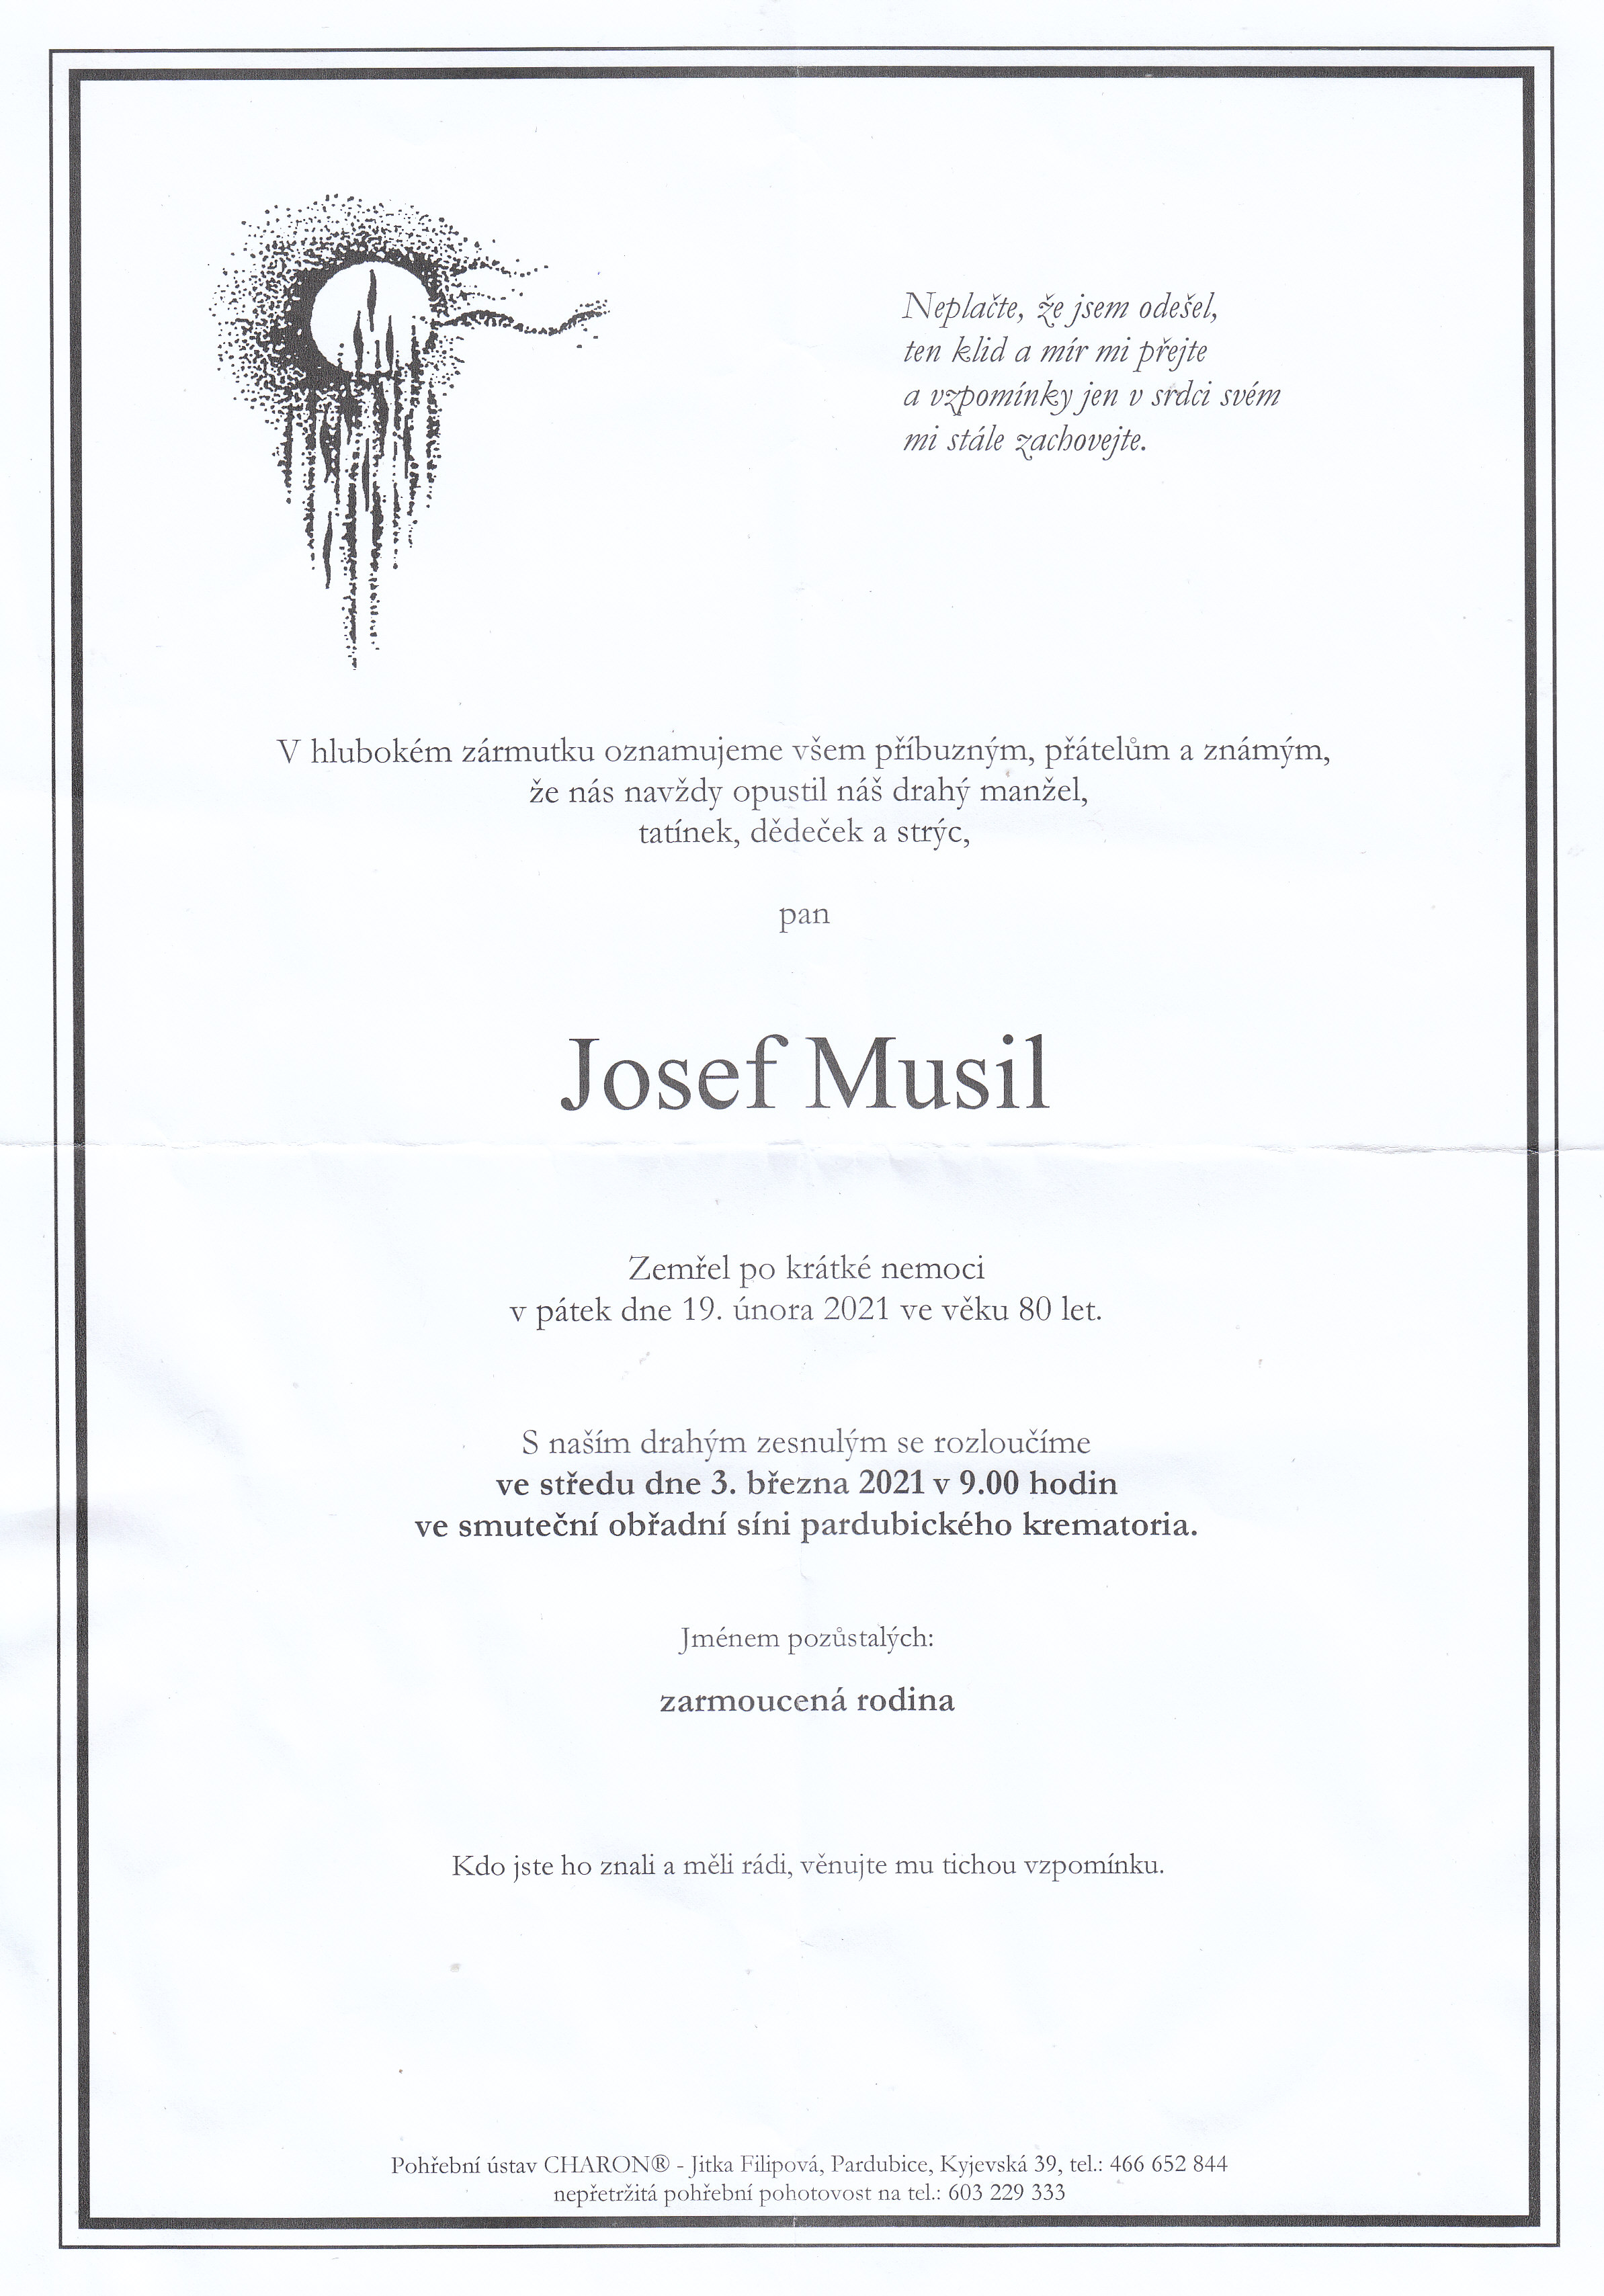 Musil Josef parte 19.2.2021 3.3.2021